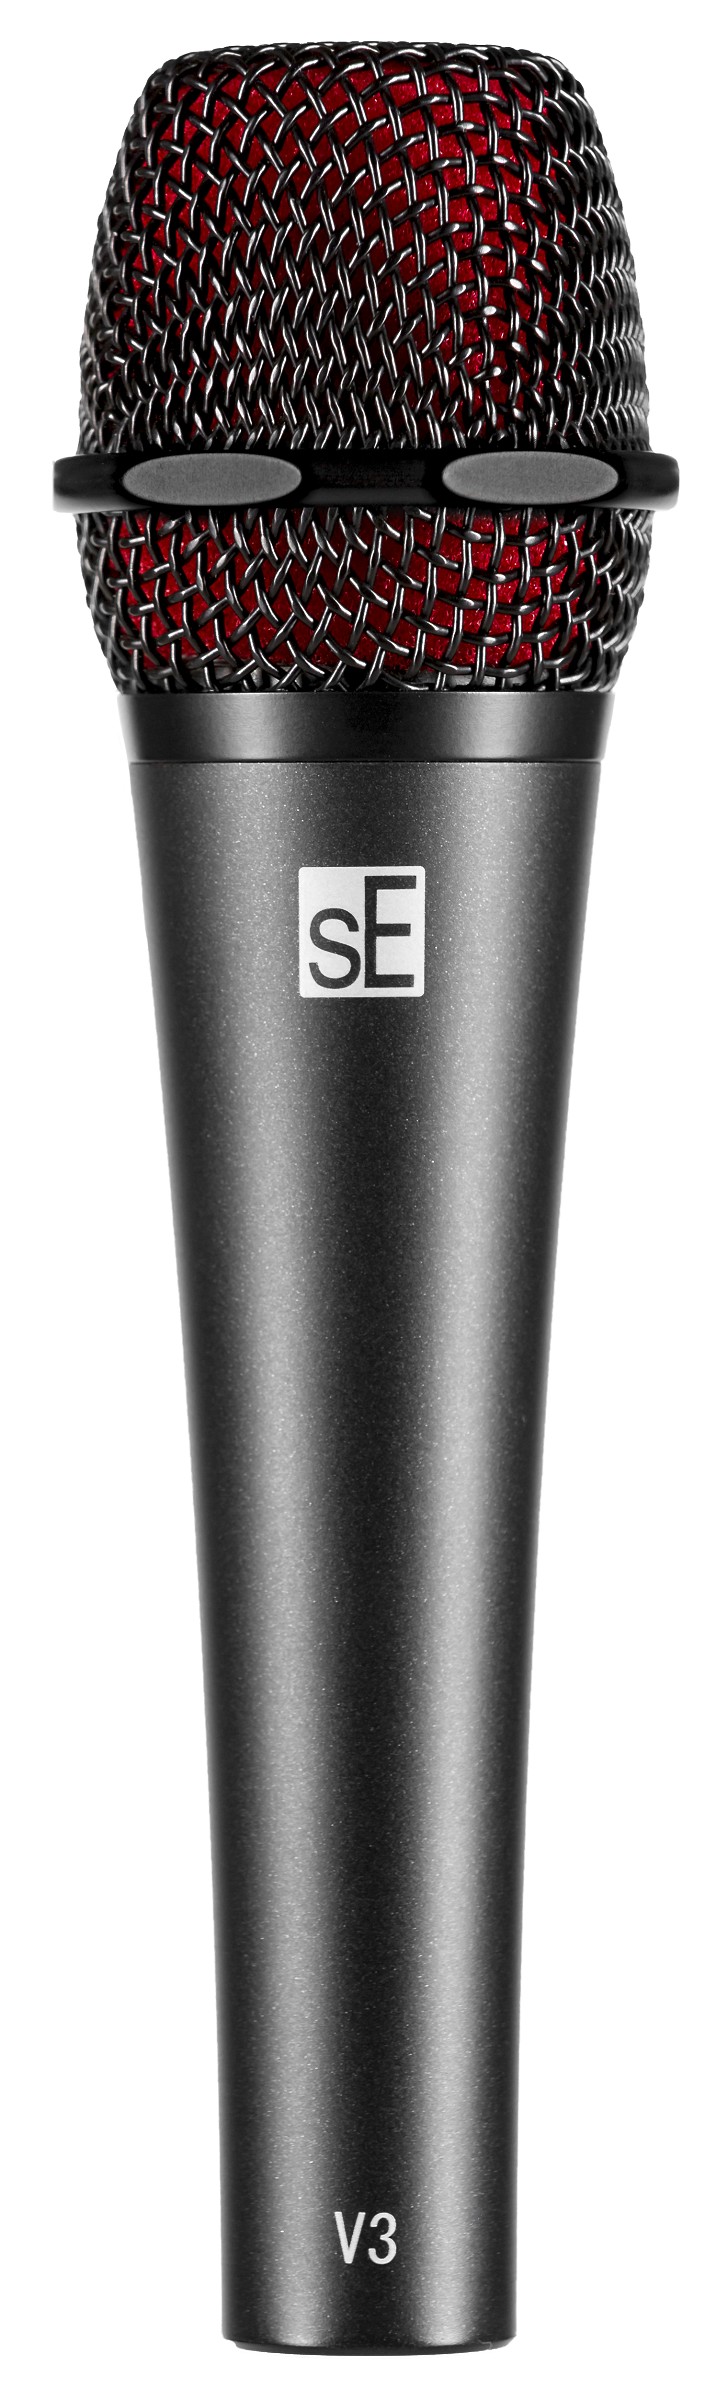 sE Electronics V3, Dynamisches Gesangsmikrofon